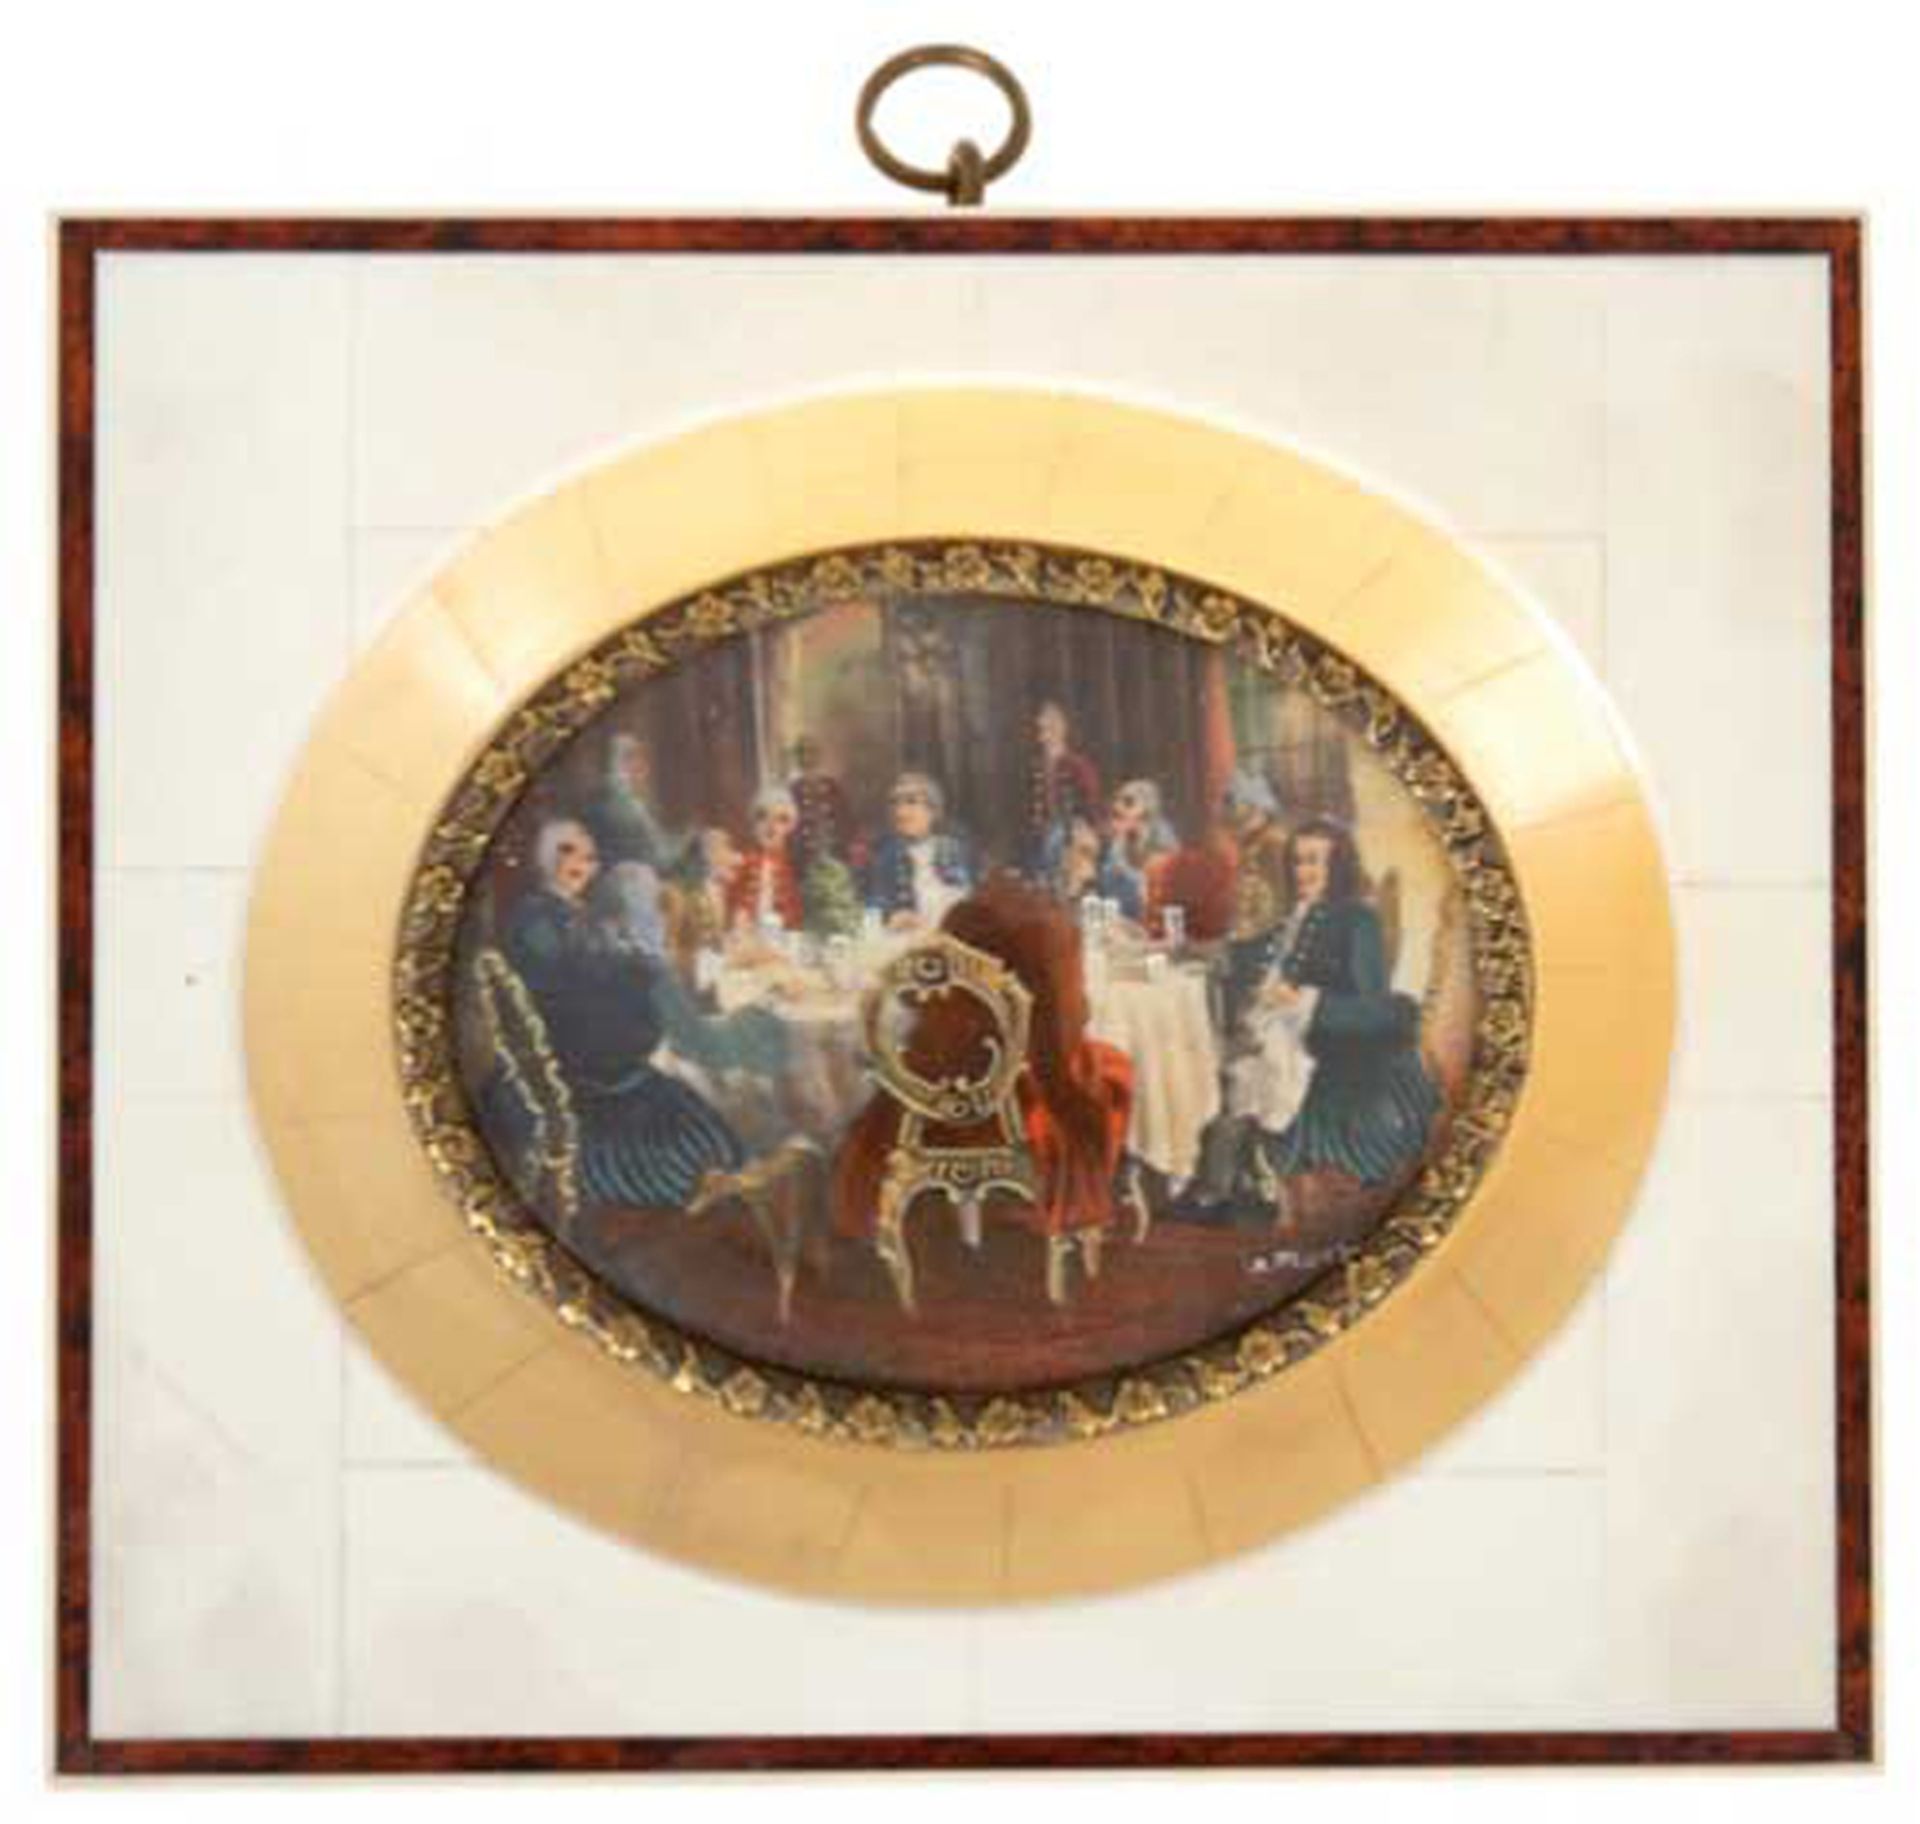 Miniatur "Rokokoszene an der gedeckten Tafel", feine Malerei, sign., oval, 6,5x8,5 cm, im Beinrahme